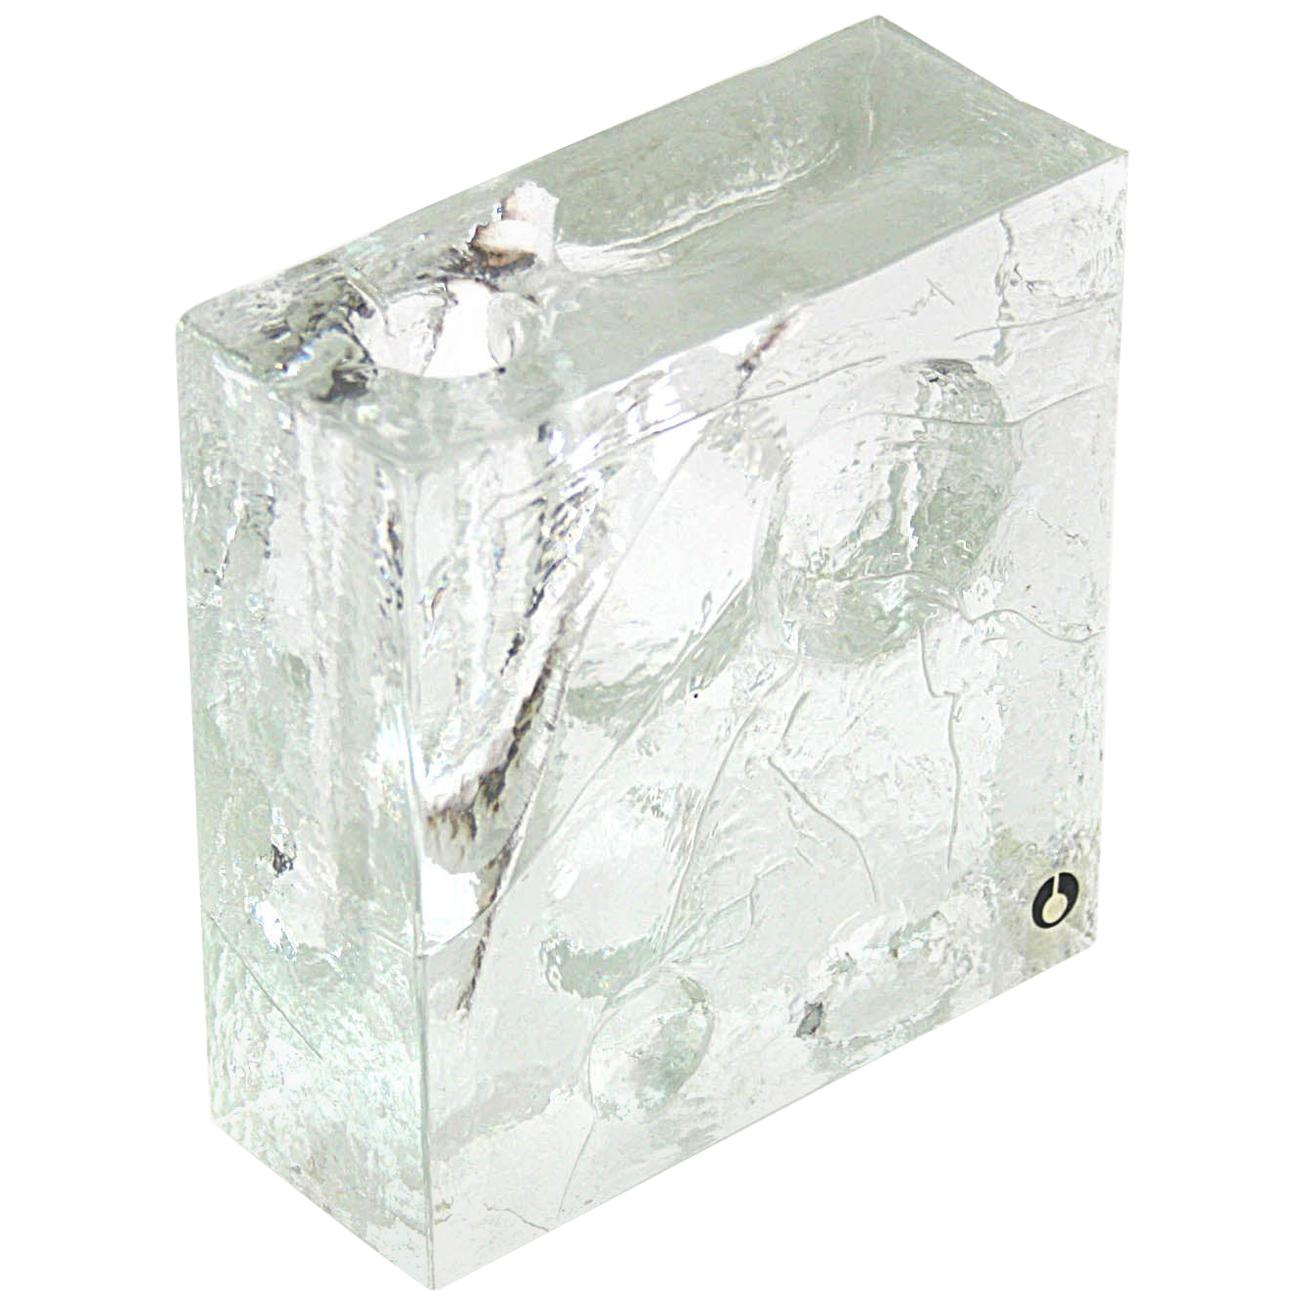 Vase Ice Glass Sculptured by Pukeberg